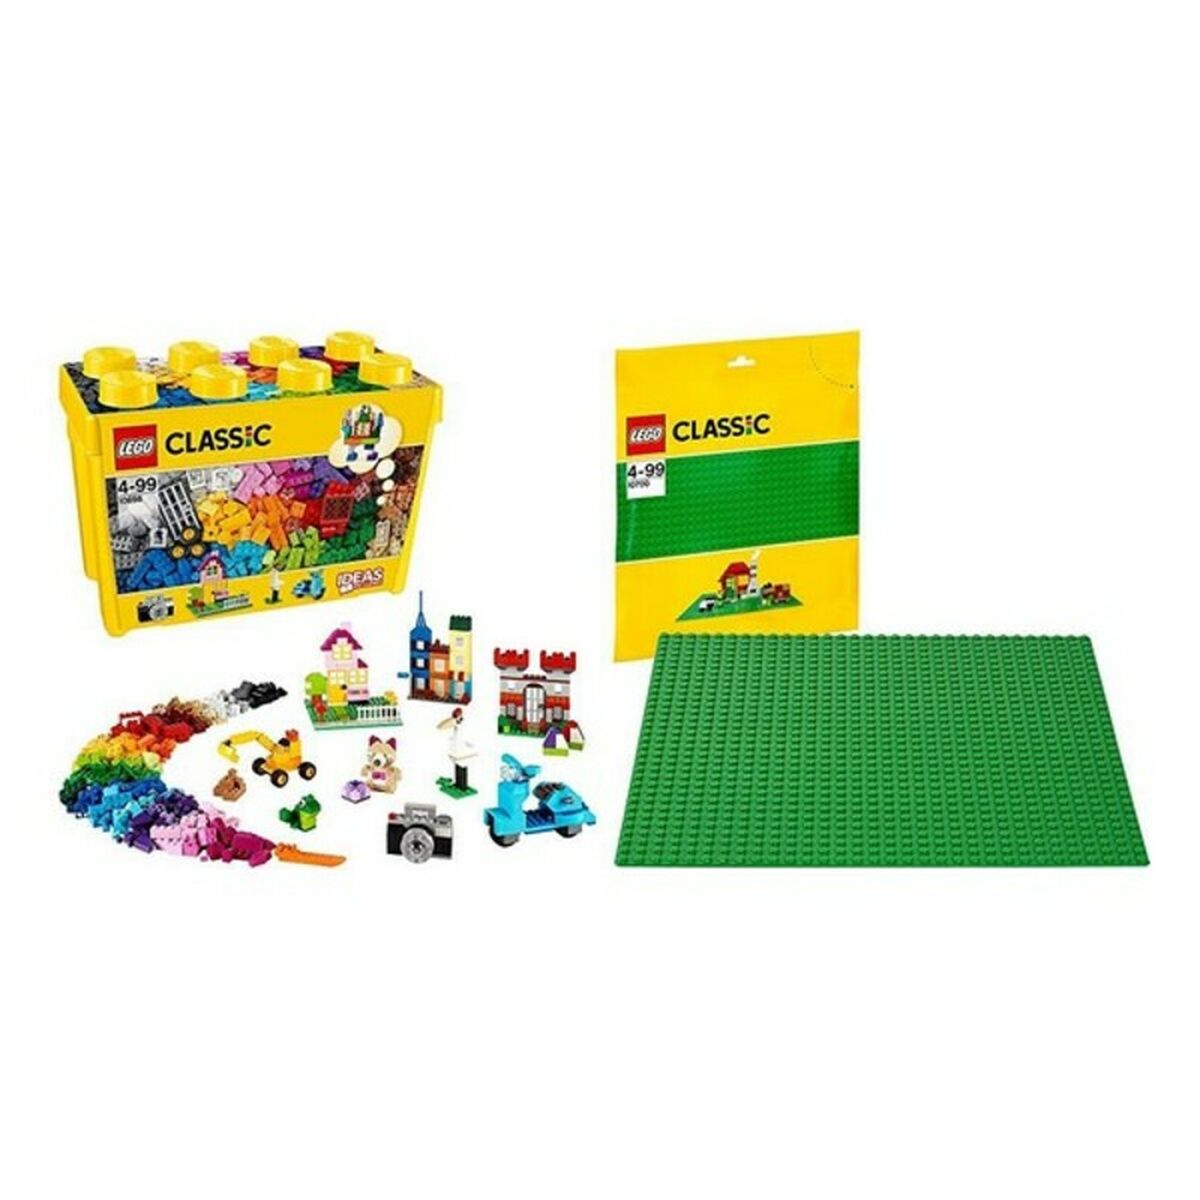 Playset Brick Box Lego Classic 10698 (790 pc's)